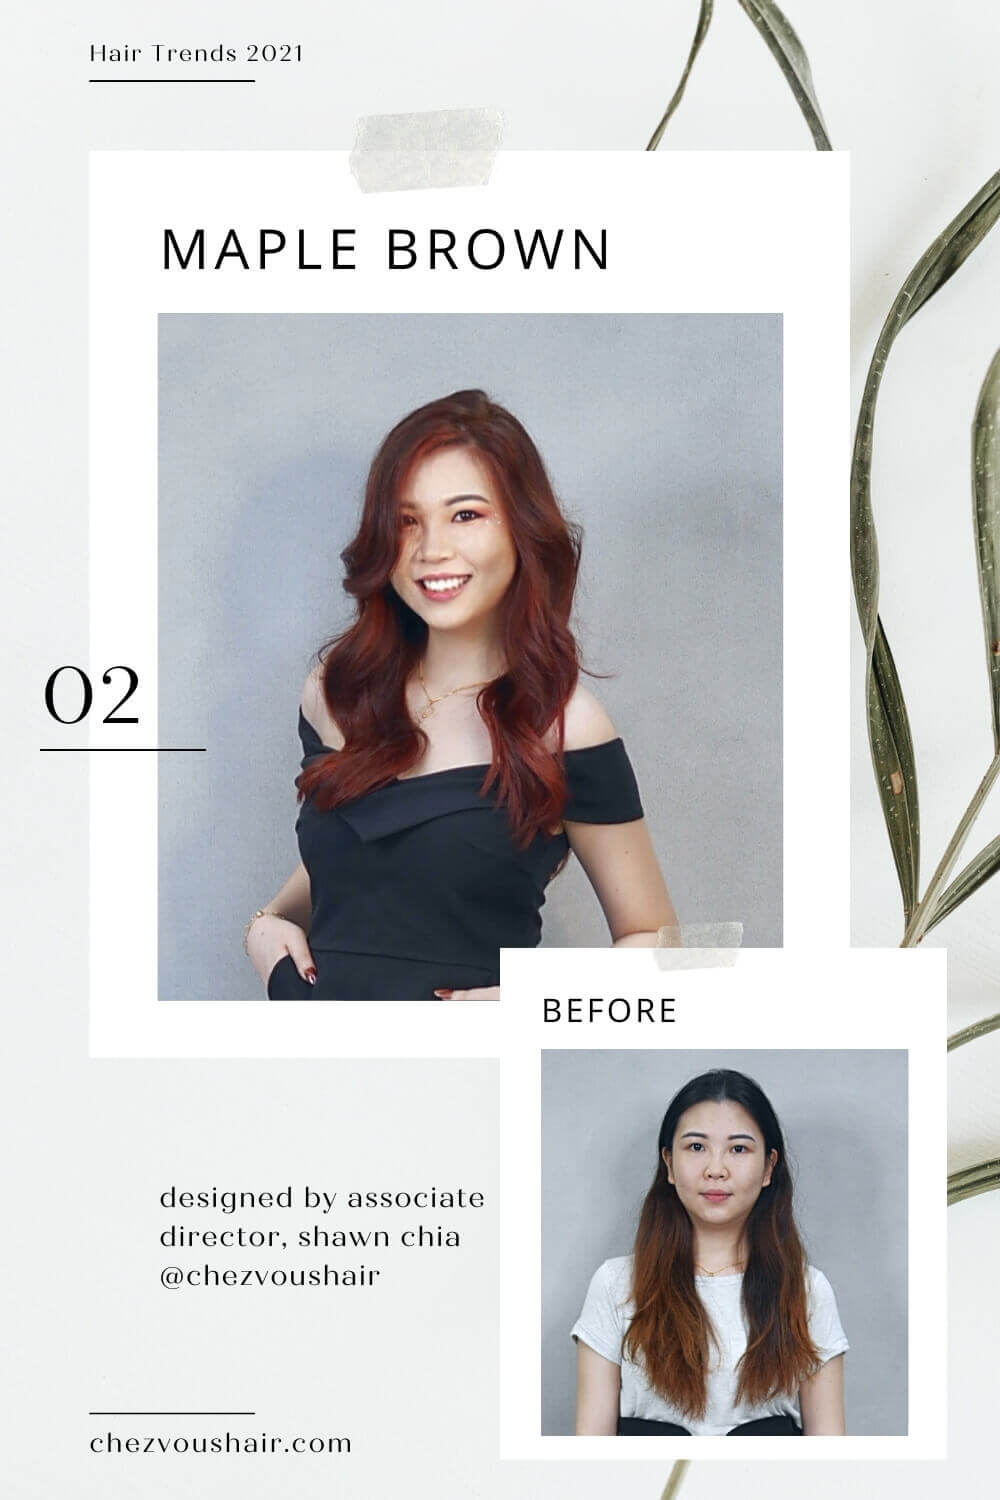 Hair Trends 2021: Maple Brown is Raging in Asia